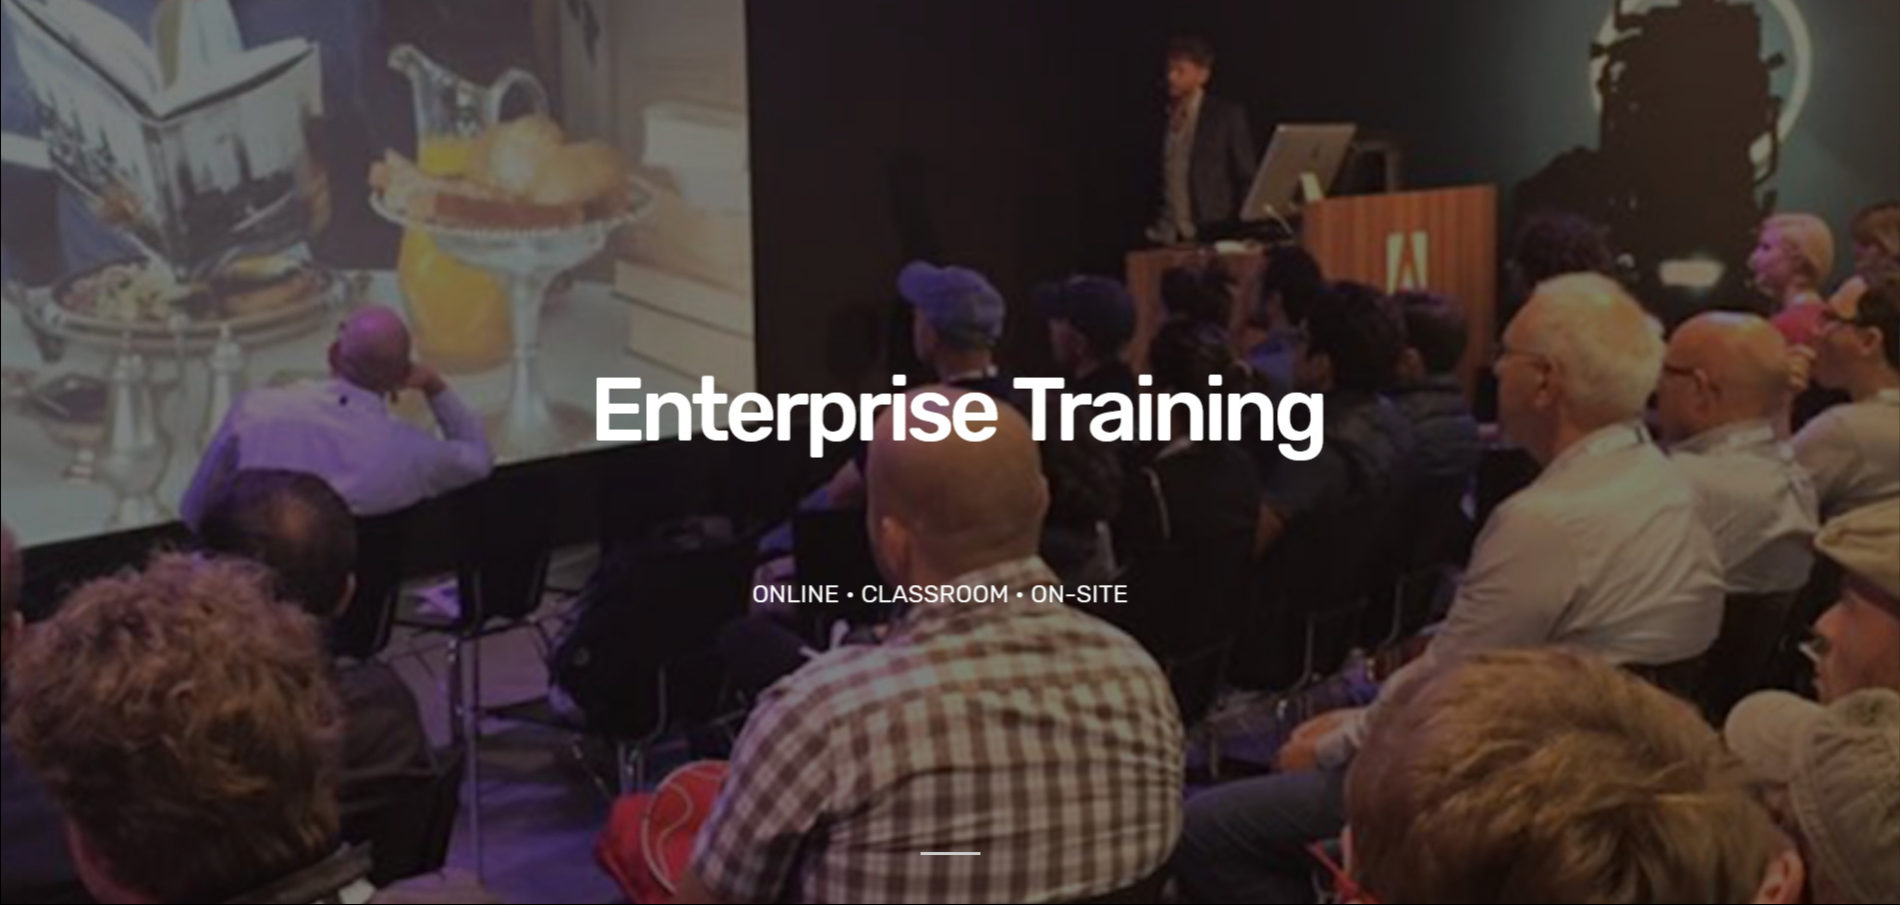 3. Enterprise Training